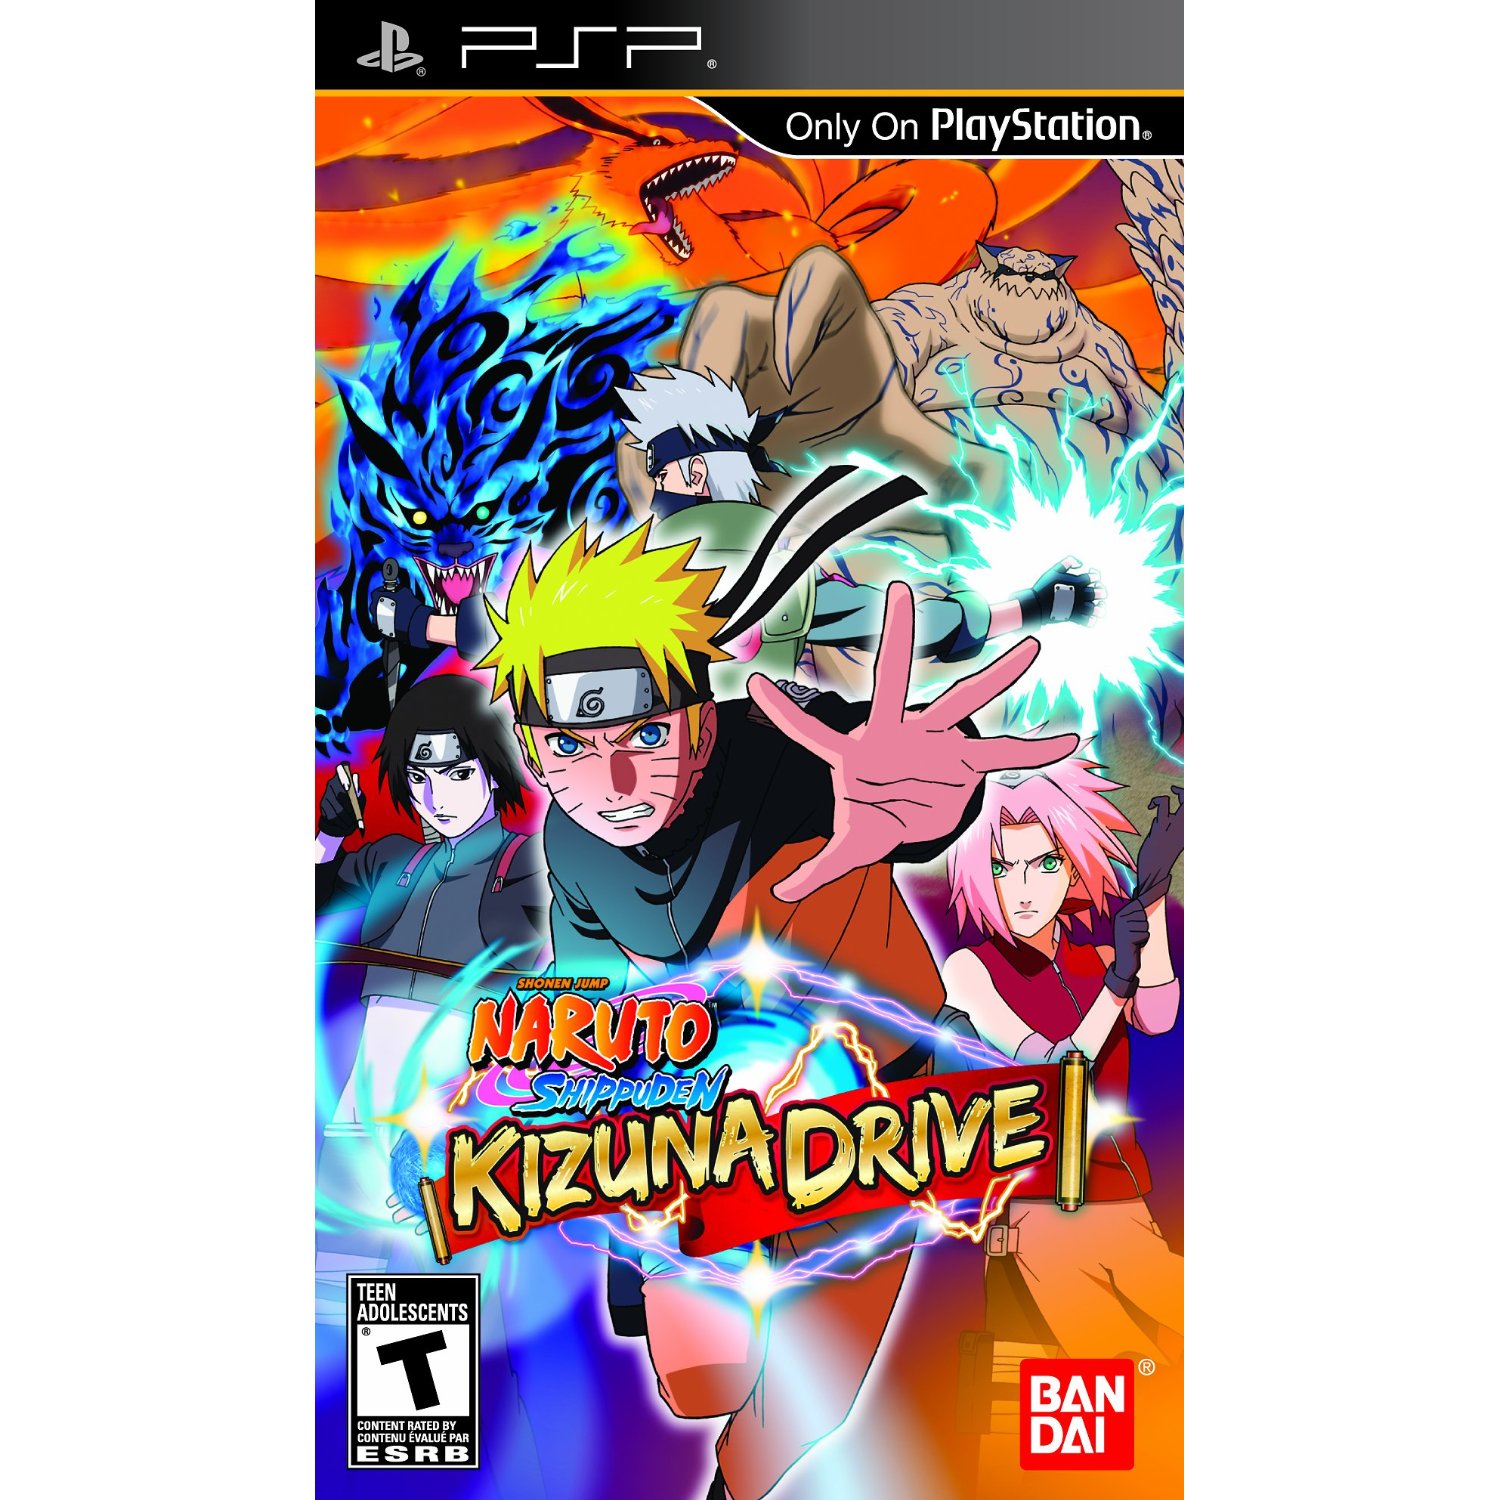 ((FREE)) Download Iso Psp Naruto Kizuna Drive Size 37 Mb